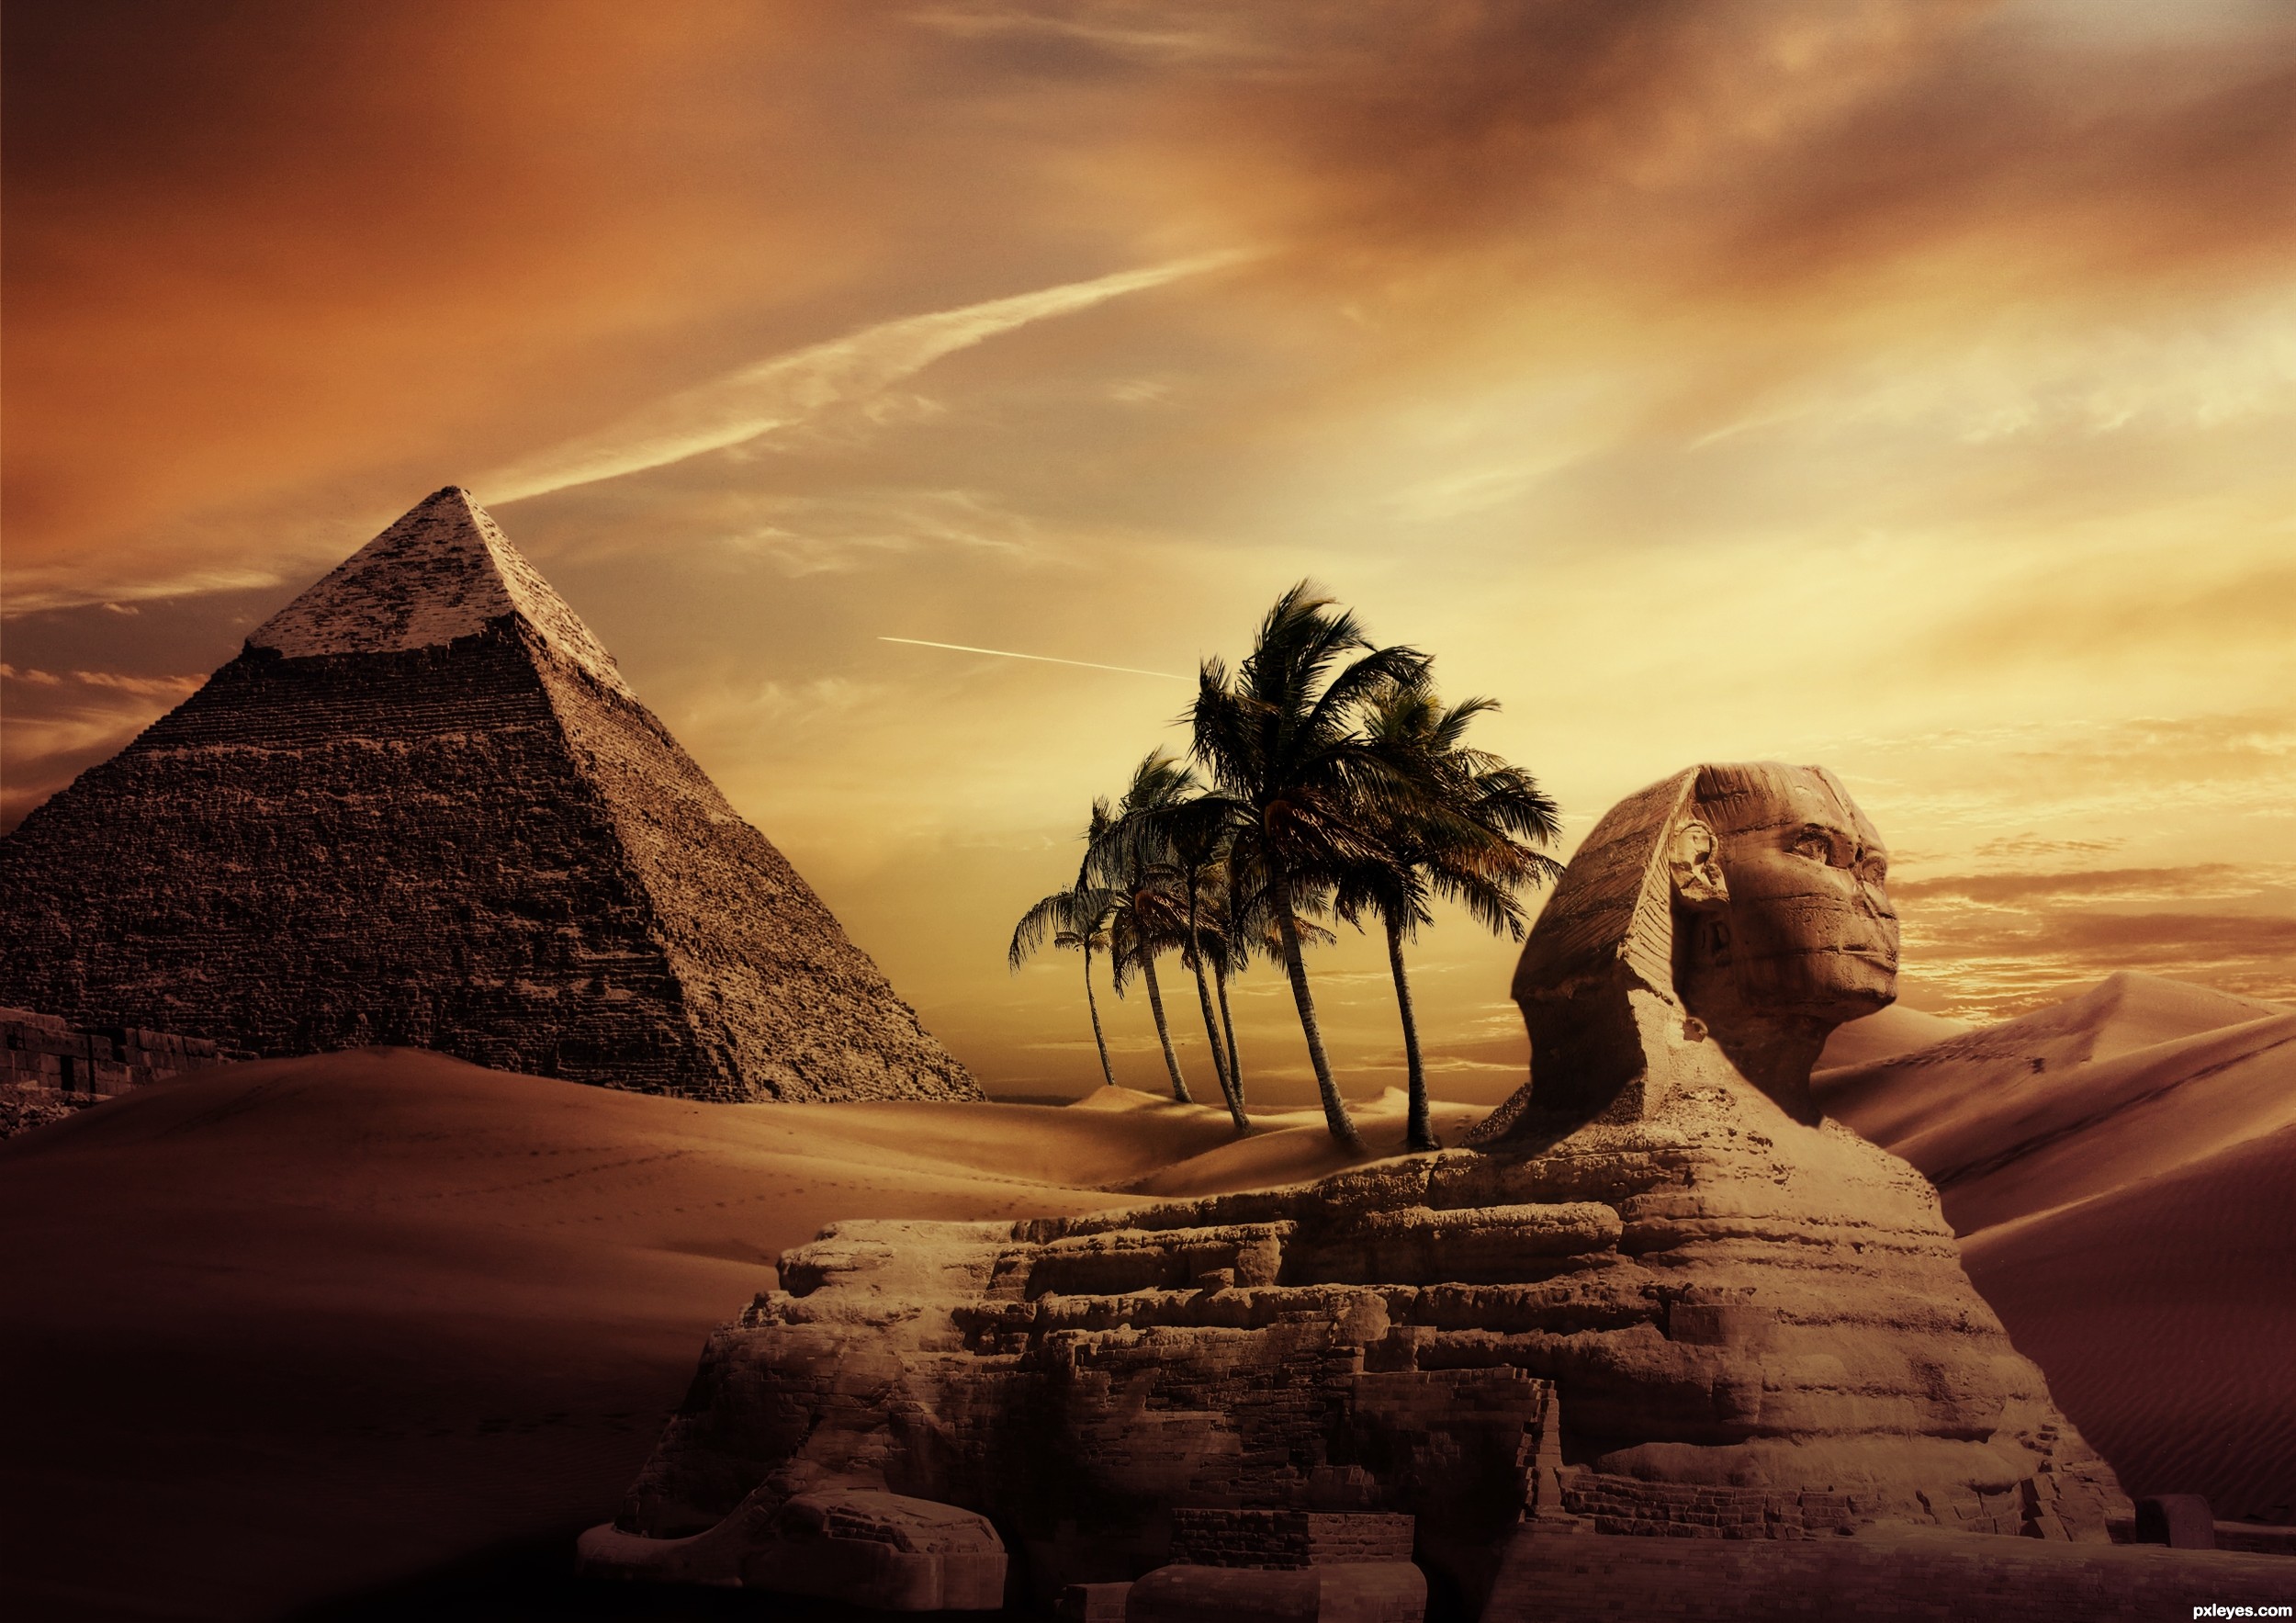 papel pintado del antiguo egipto,pirámide,naturaleza,cielo,sitio arqueológico,historia antigua